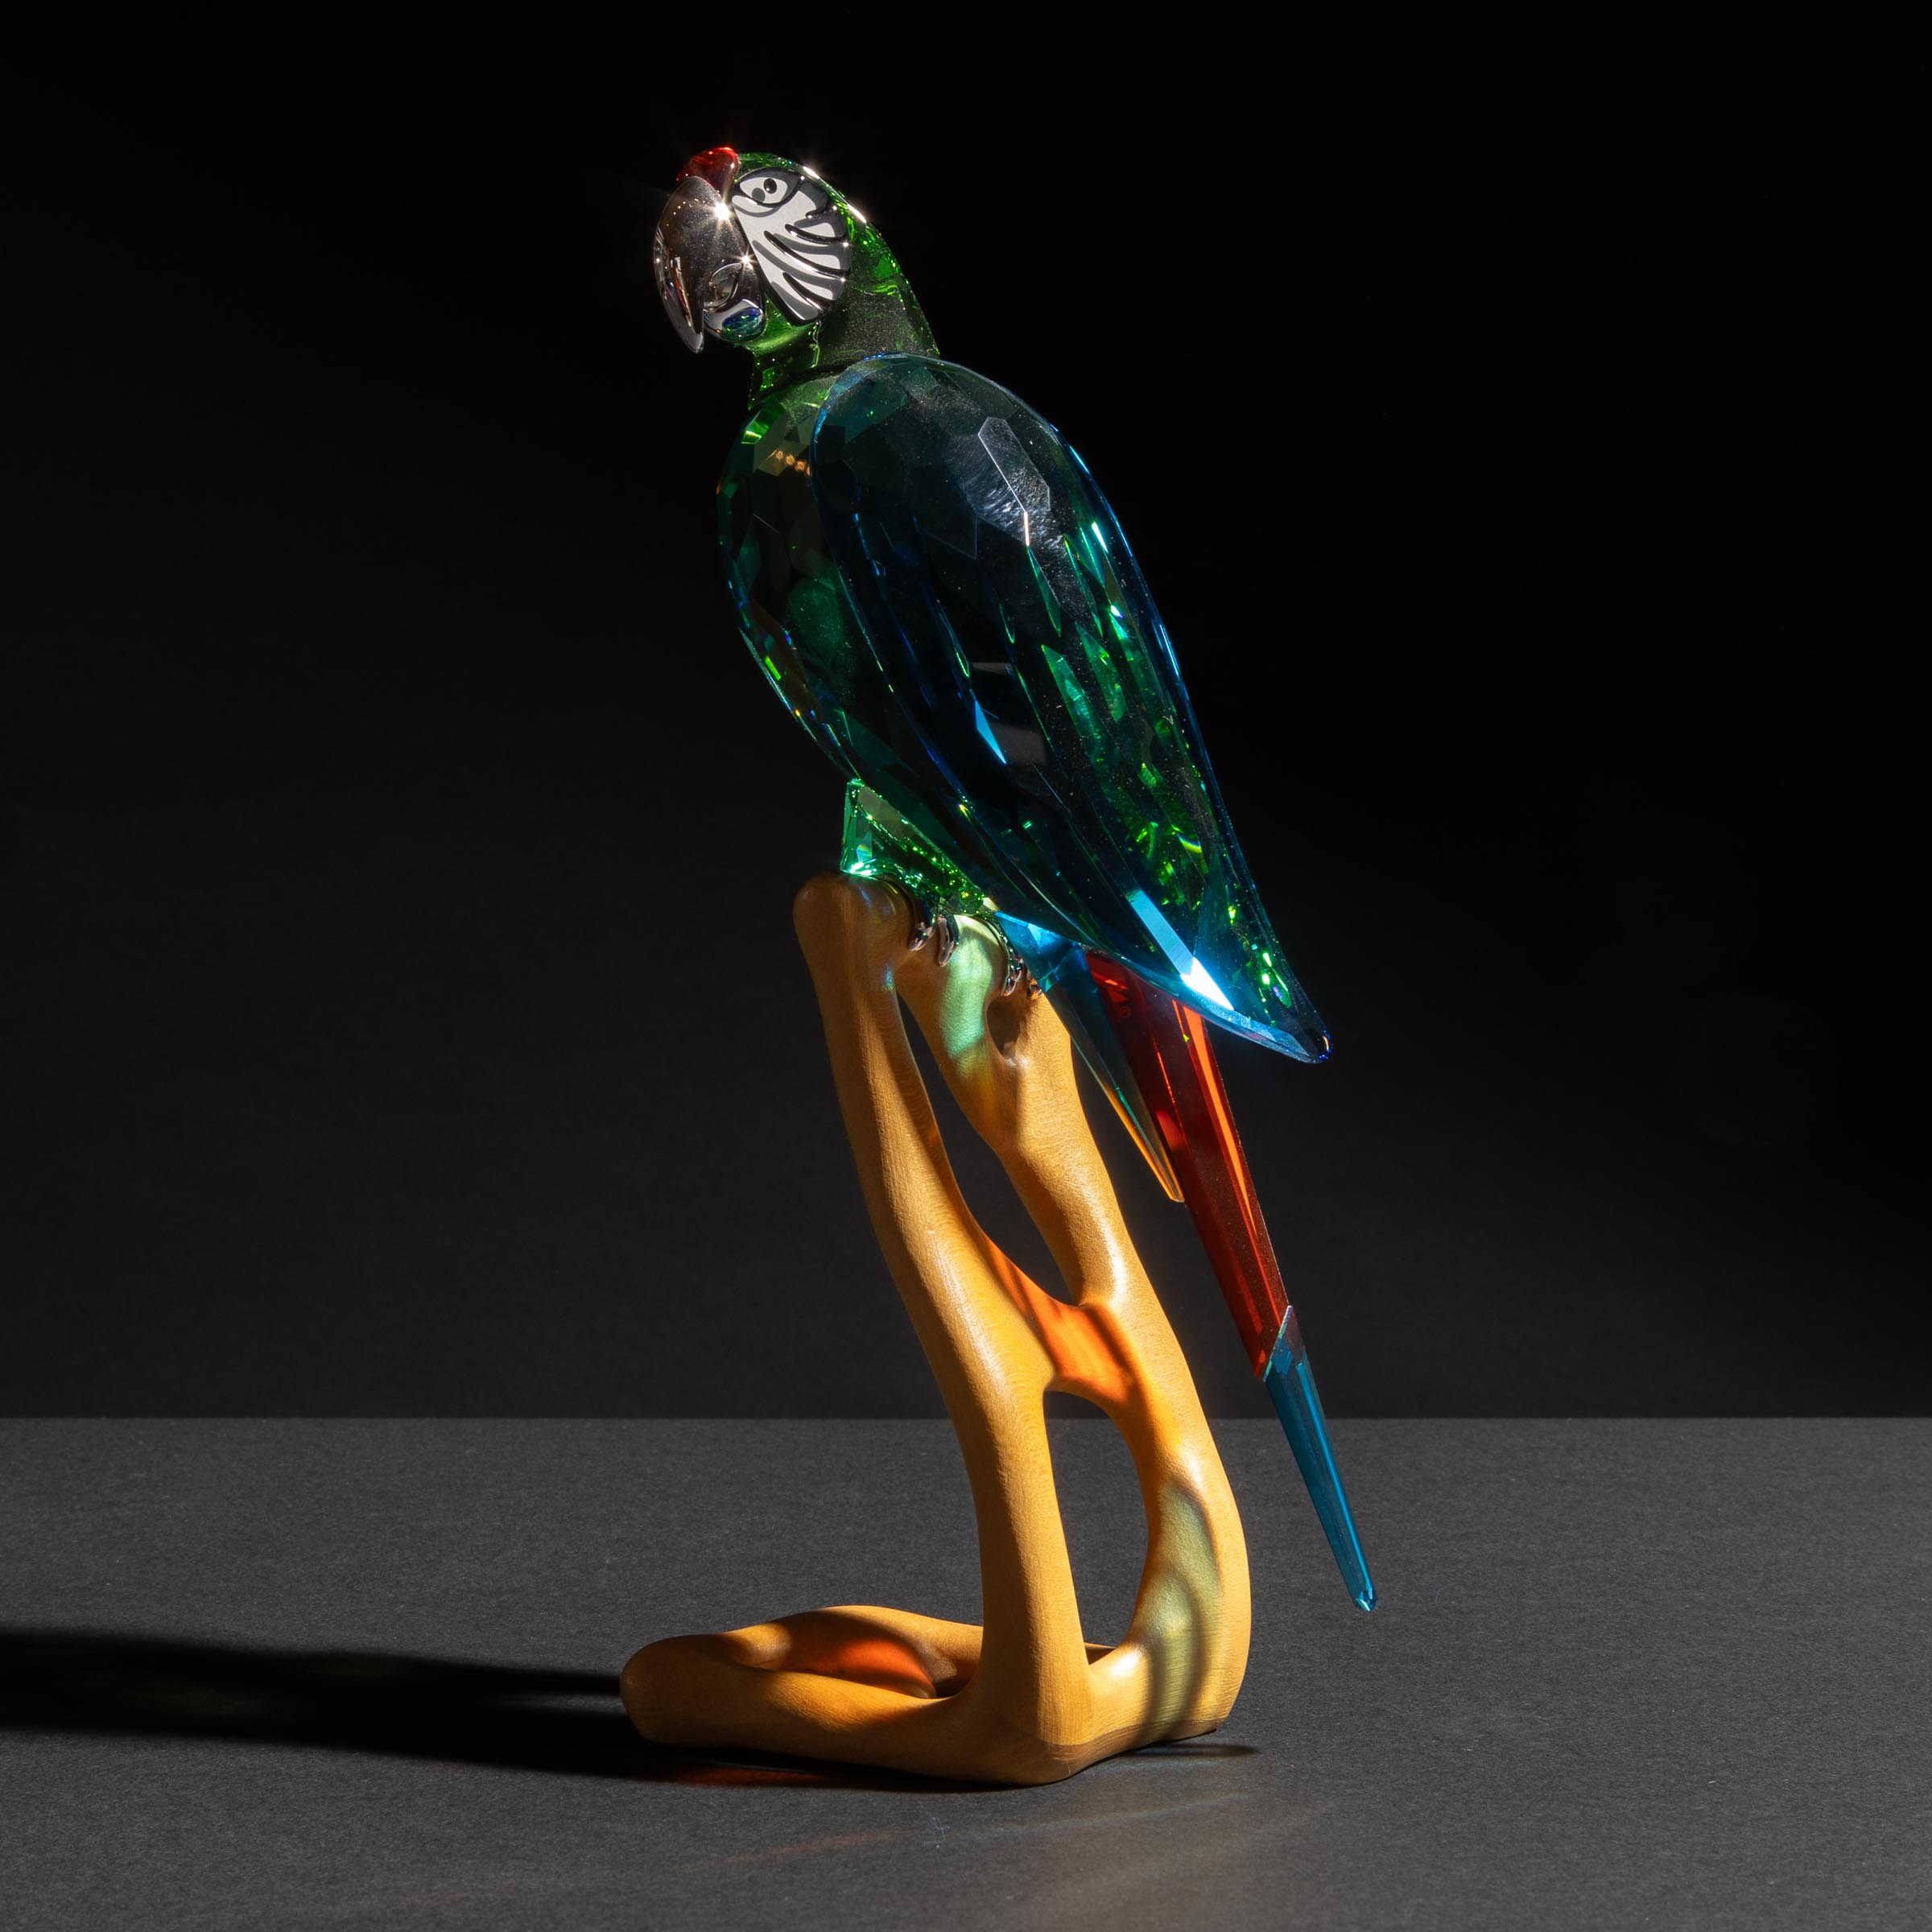 Swarovski Crystal Limited Edition Macaw